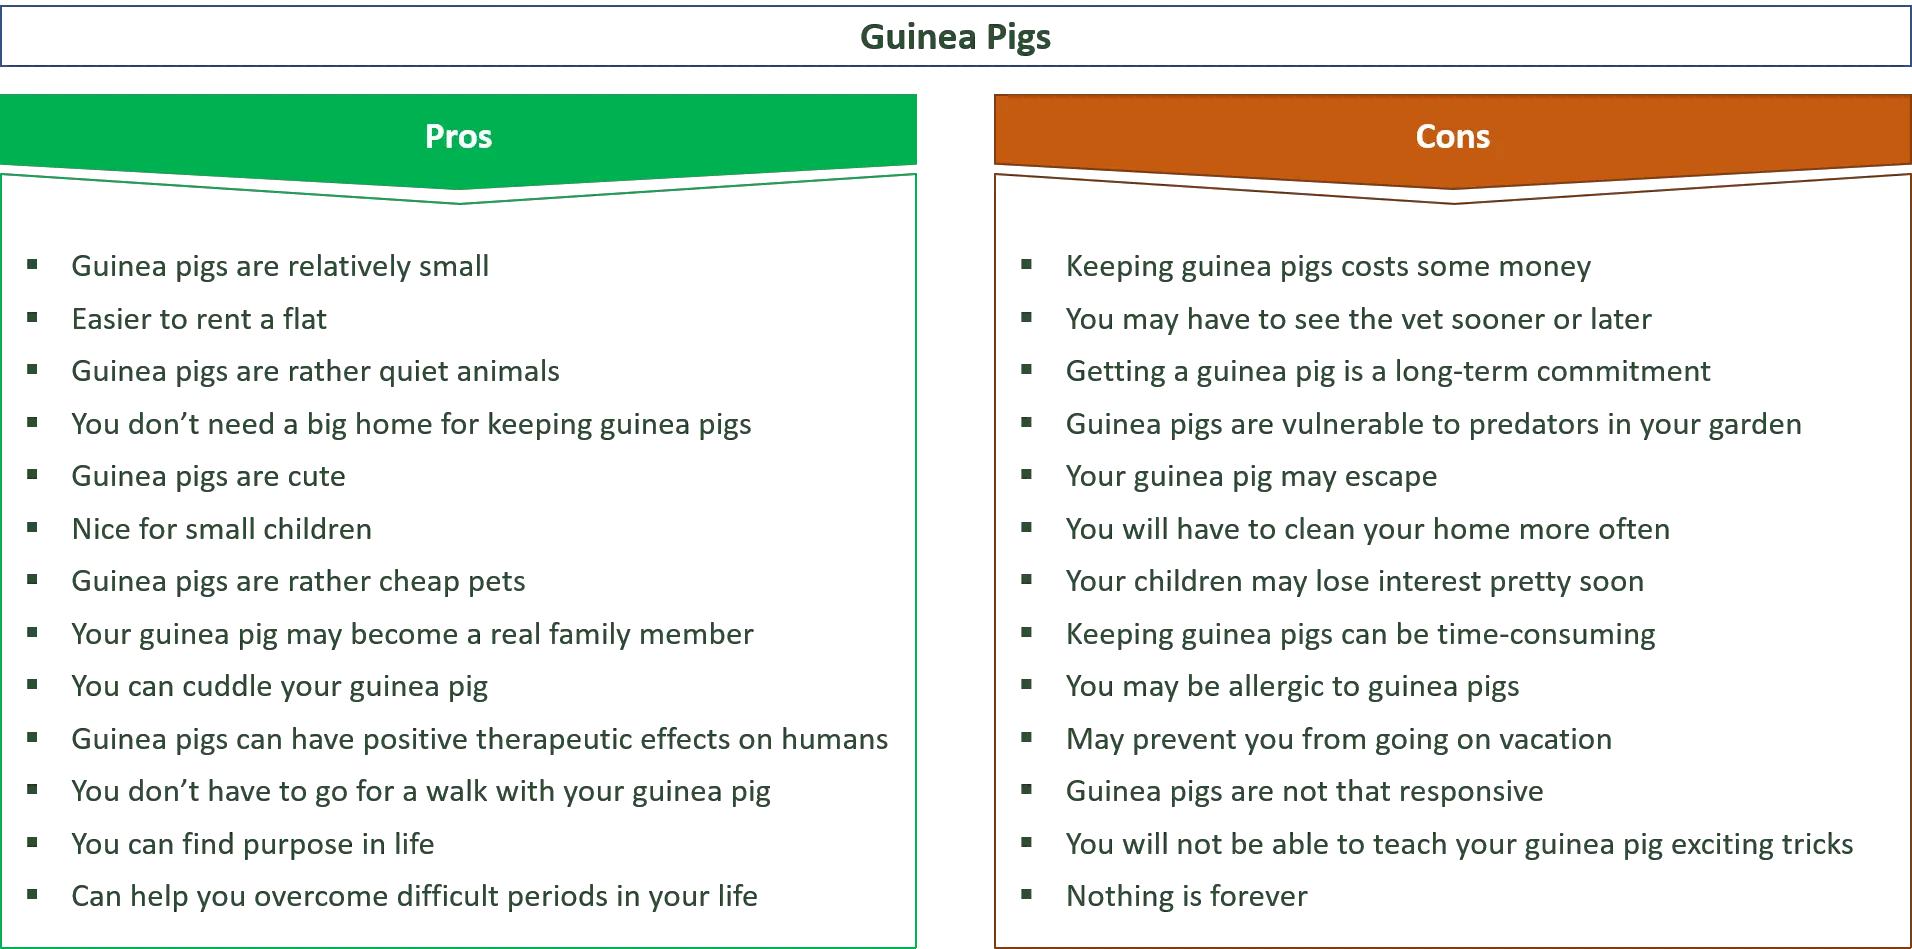 advantages and disadvantages of guinea pigs